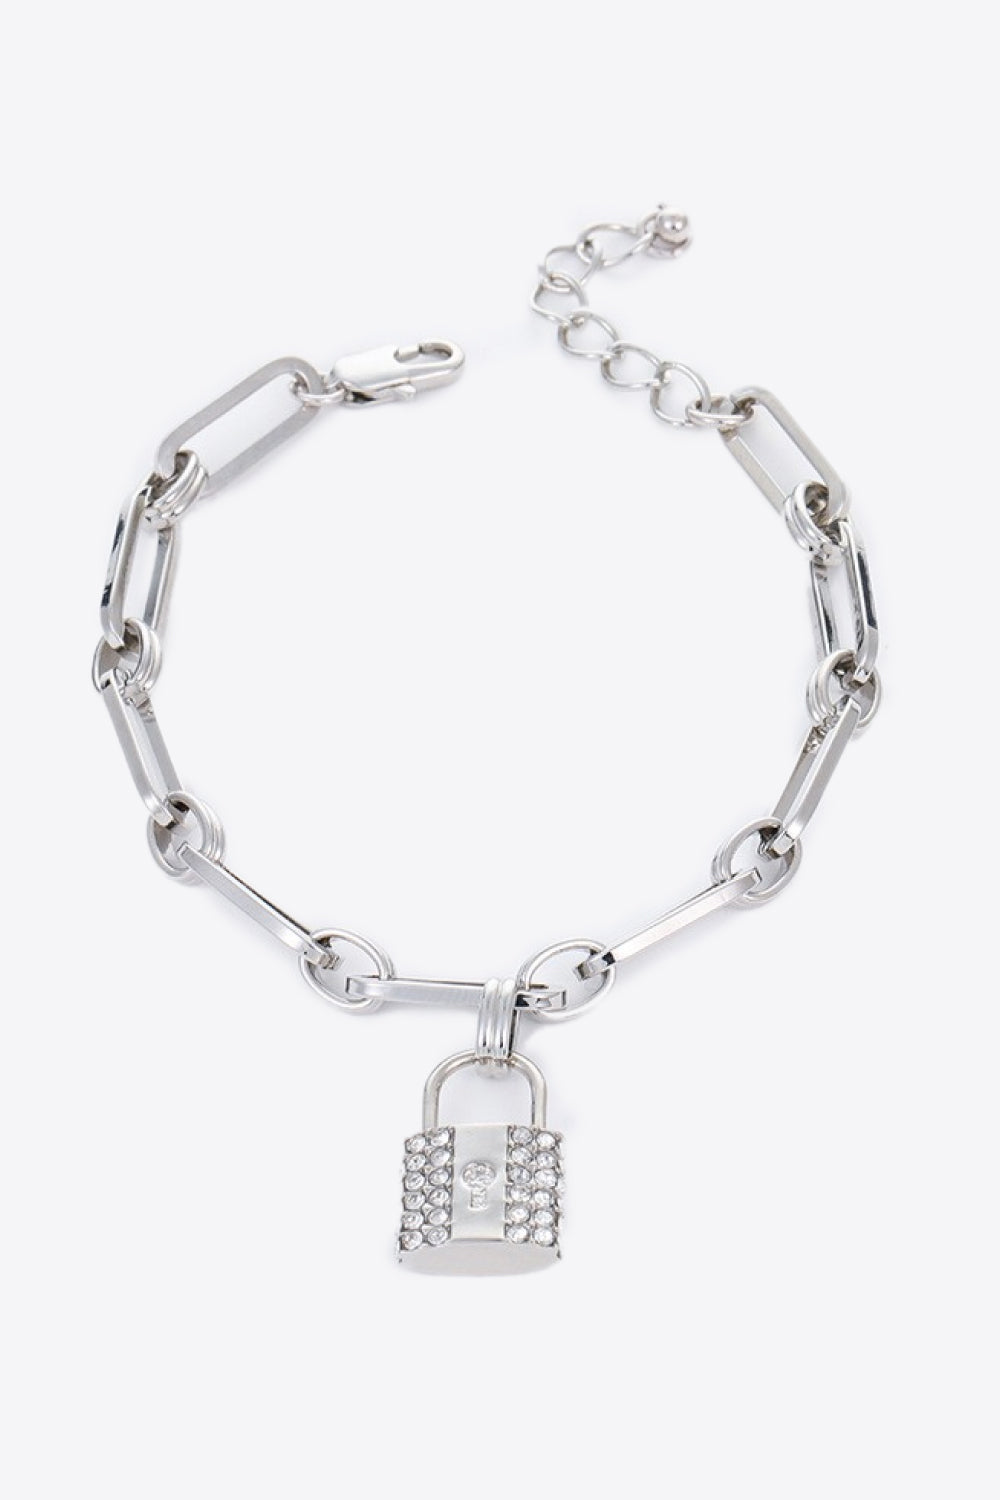 Lock Charm Chain Bracelet - Silver / One Size - Women’s Jewelry - Bracelets - 4 - 2024